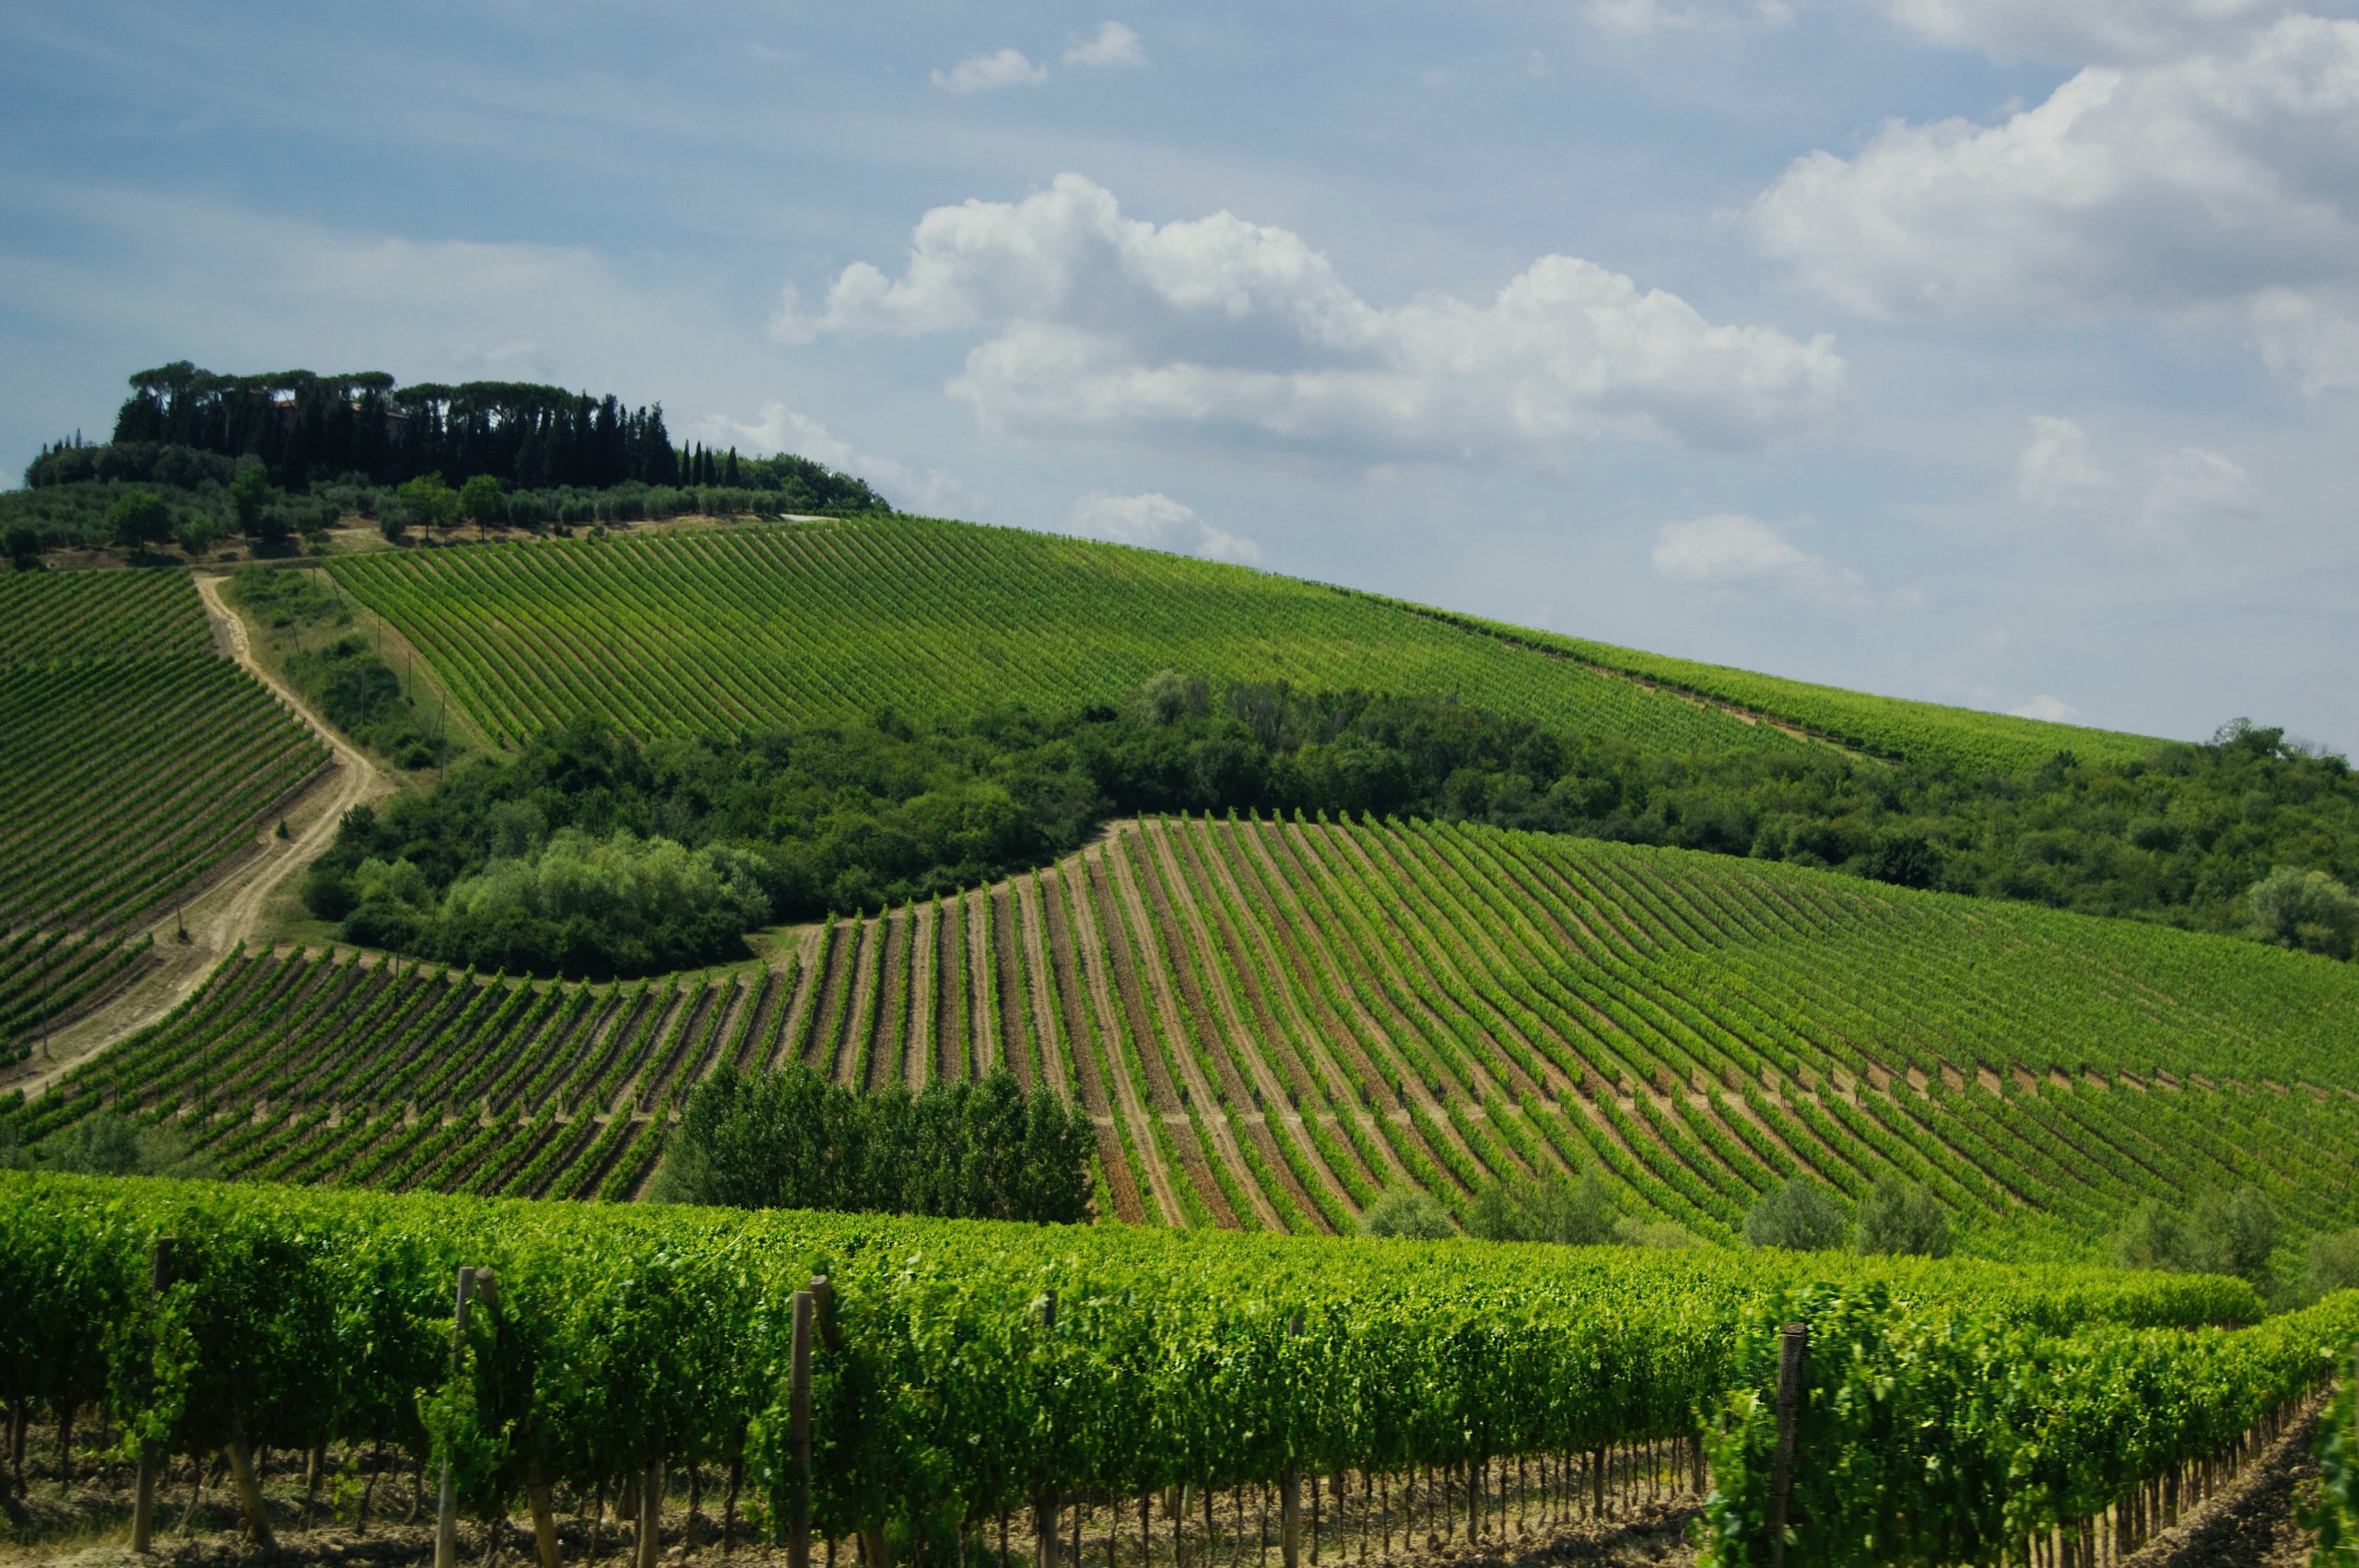 Tuscan vineyard. Photo by Jonathan Skule